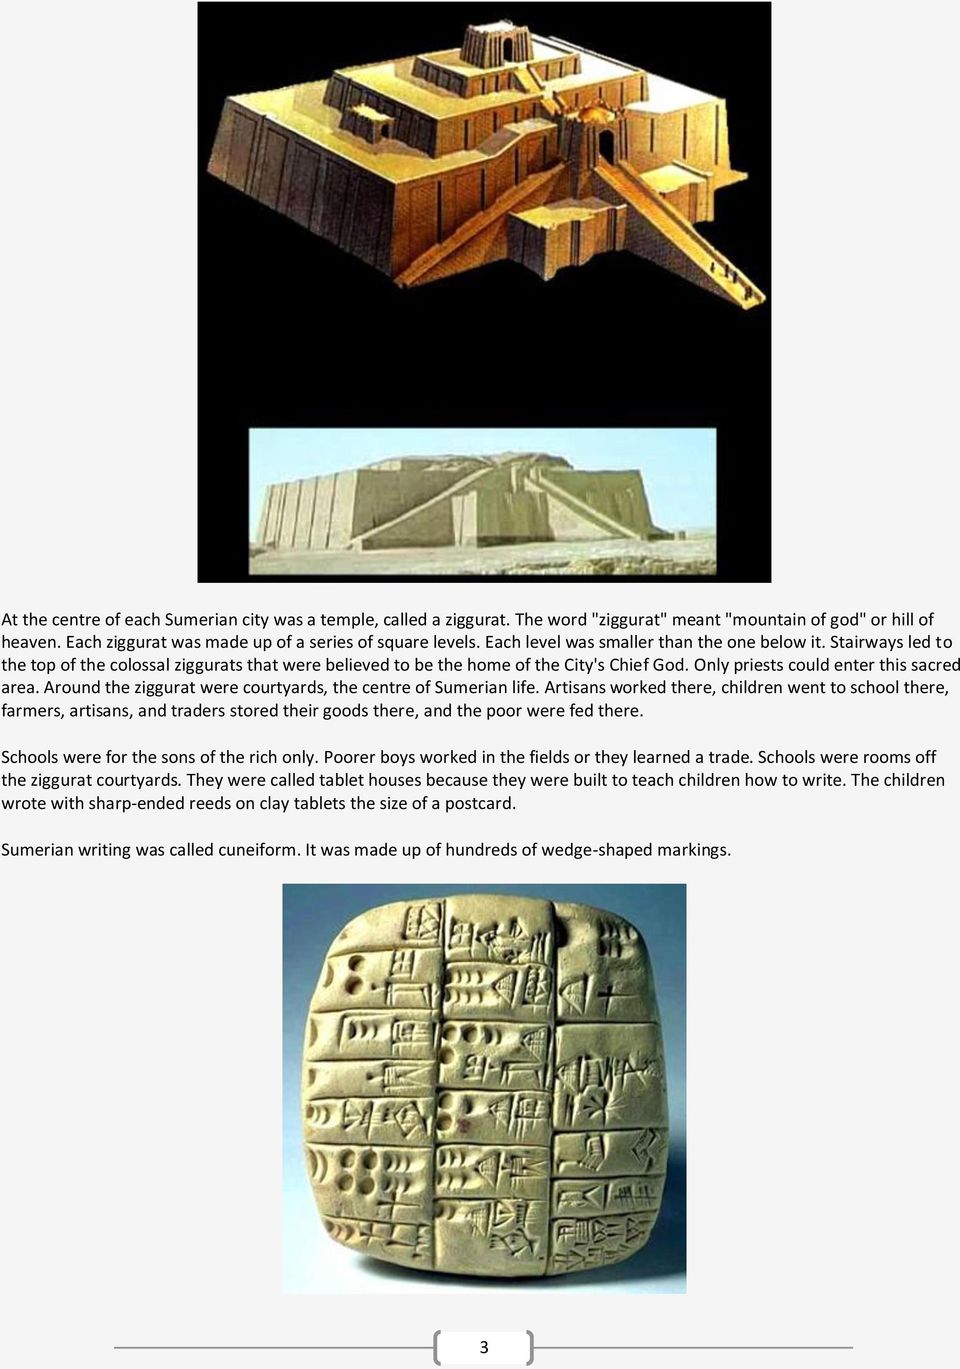 Around the ziggurat were courtyards, the centre of Sumerian life.